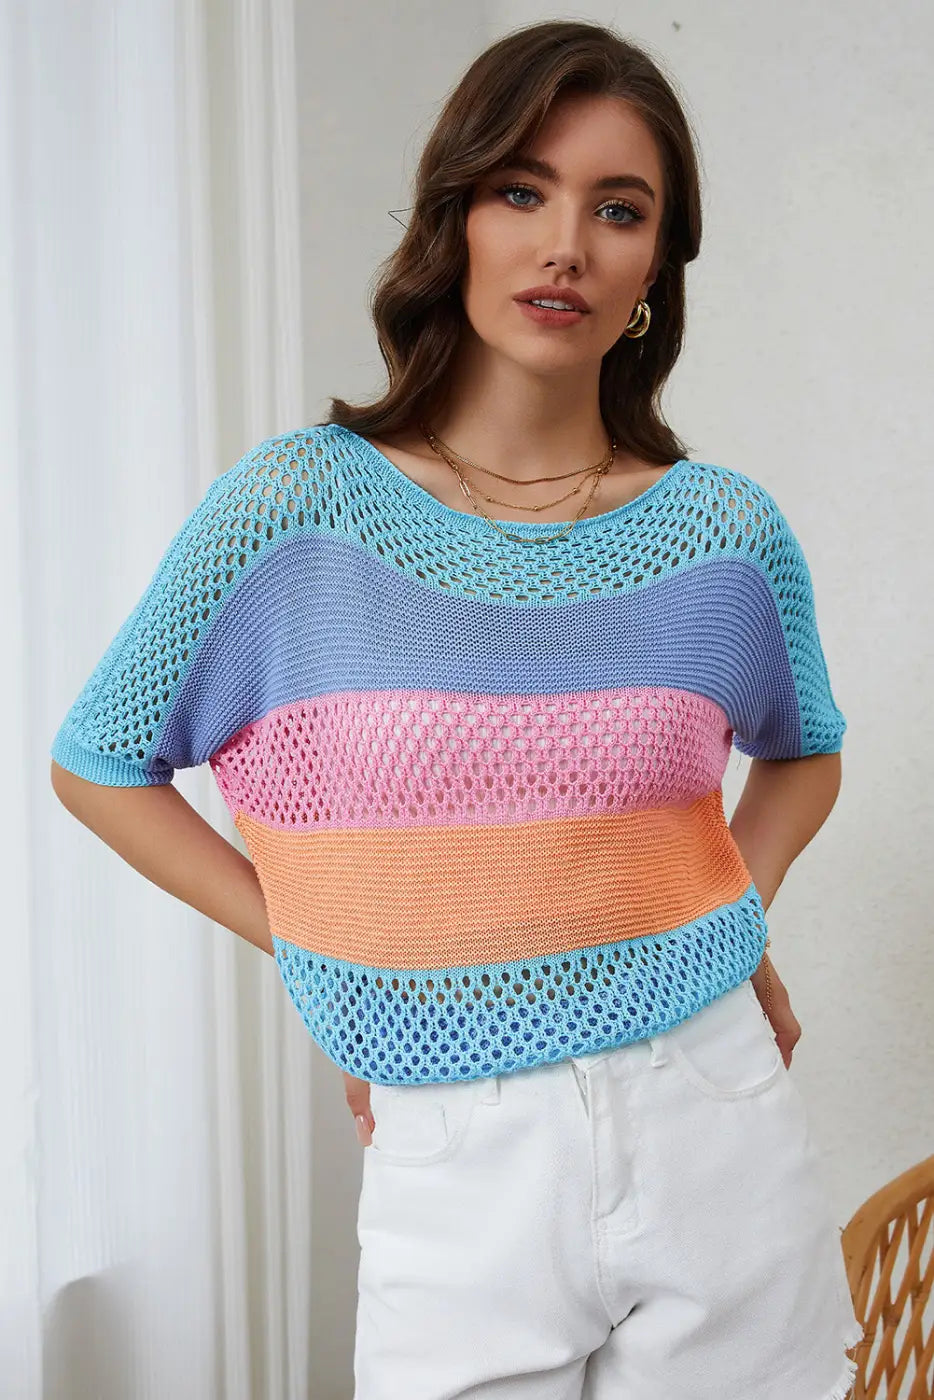 Eyelet knit striped half sleeves top - sky blue / s / 100% viscose - short sleeve sweaters